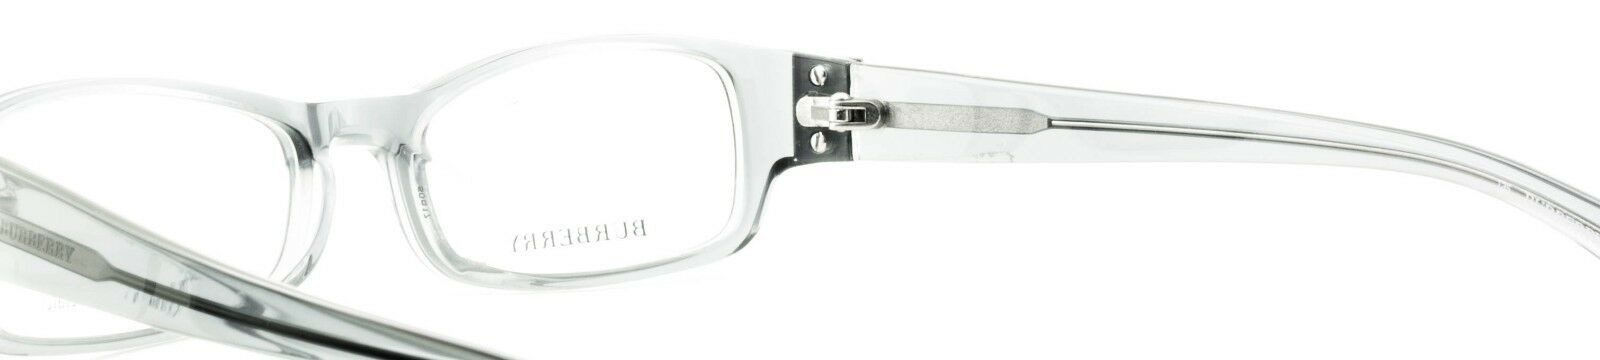 BURBERRY B 8402 BP2 Eyewear FRAMES RX Optical Glasses Eyeglasses - ITALY - New